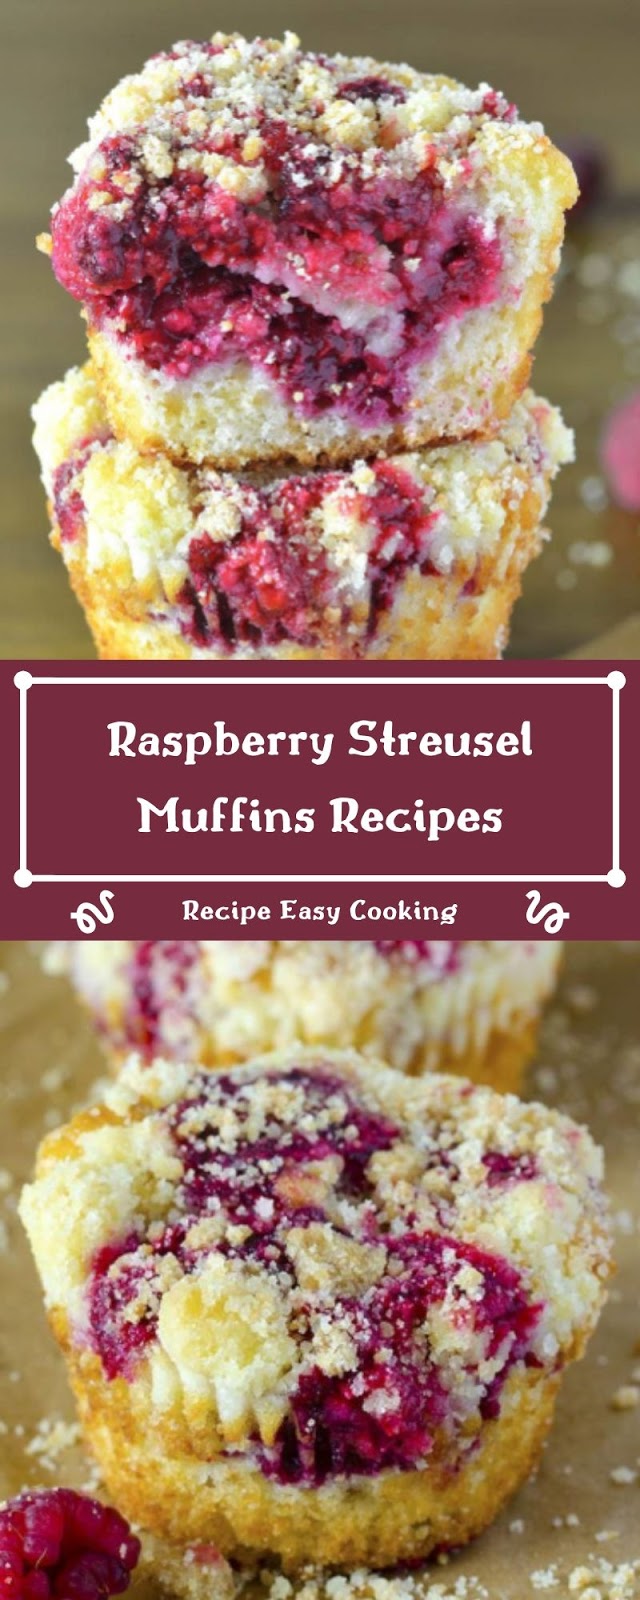 Raspberry Streusel Muffins Recipes